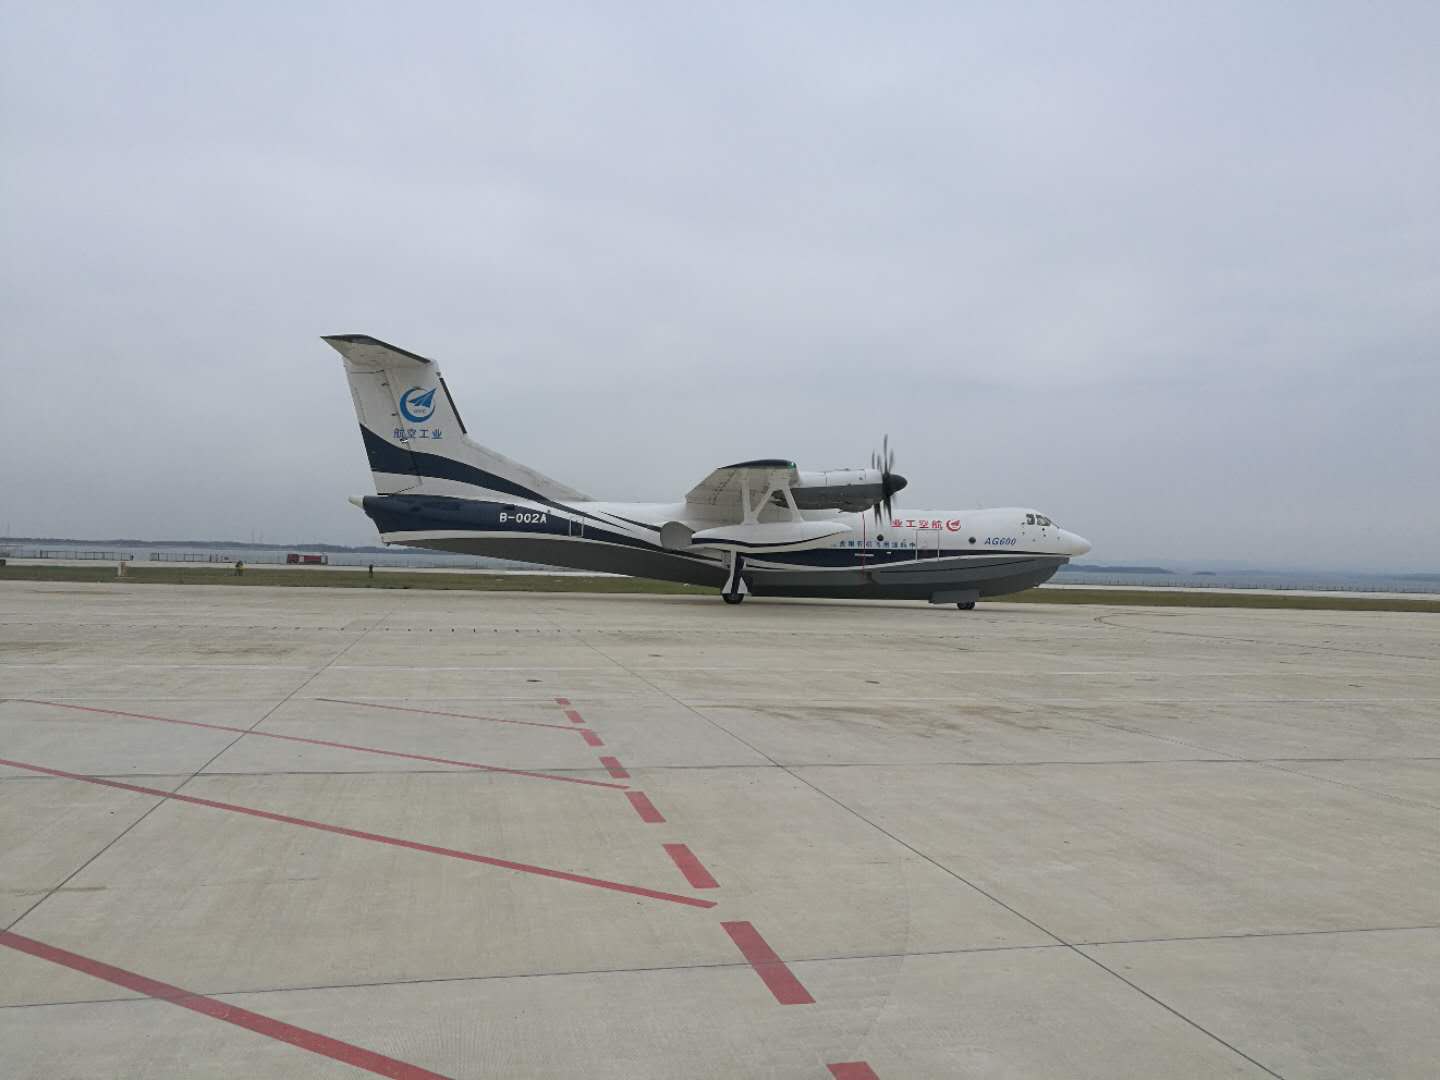 RX1E-S双座电动水上飞机-辽宁通用航空研究院